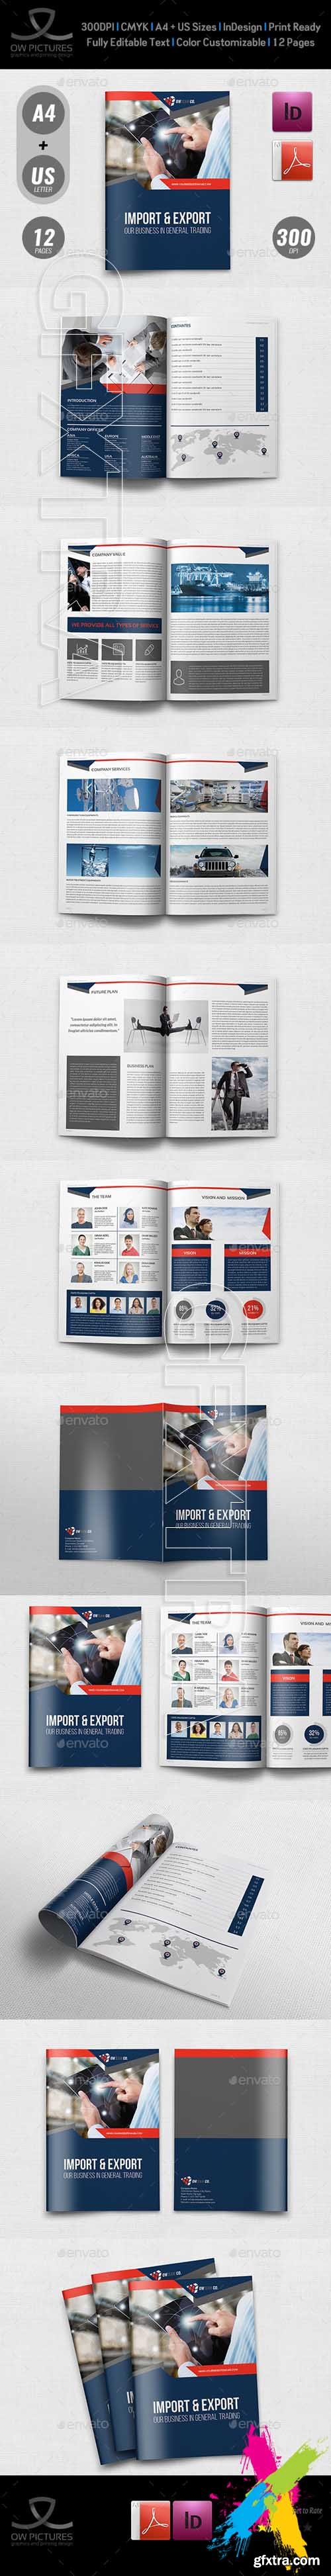 Graphicriver - Company Profile Brochure Template Vol.44 -12 Pages 20178644